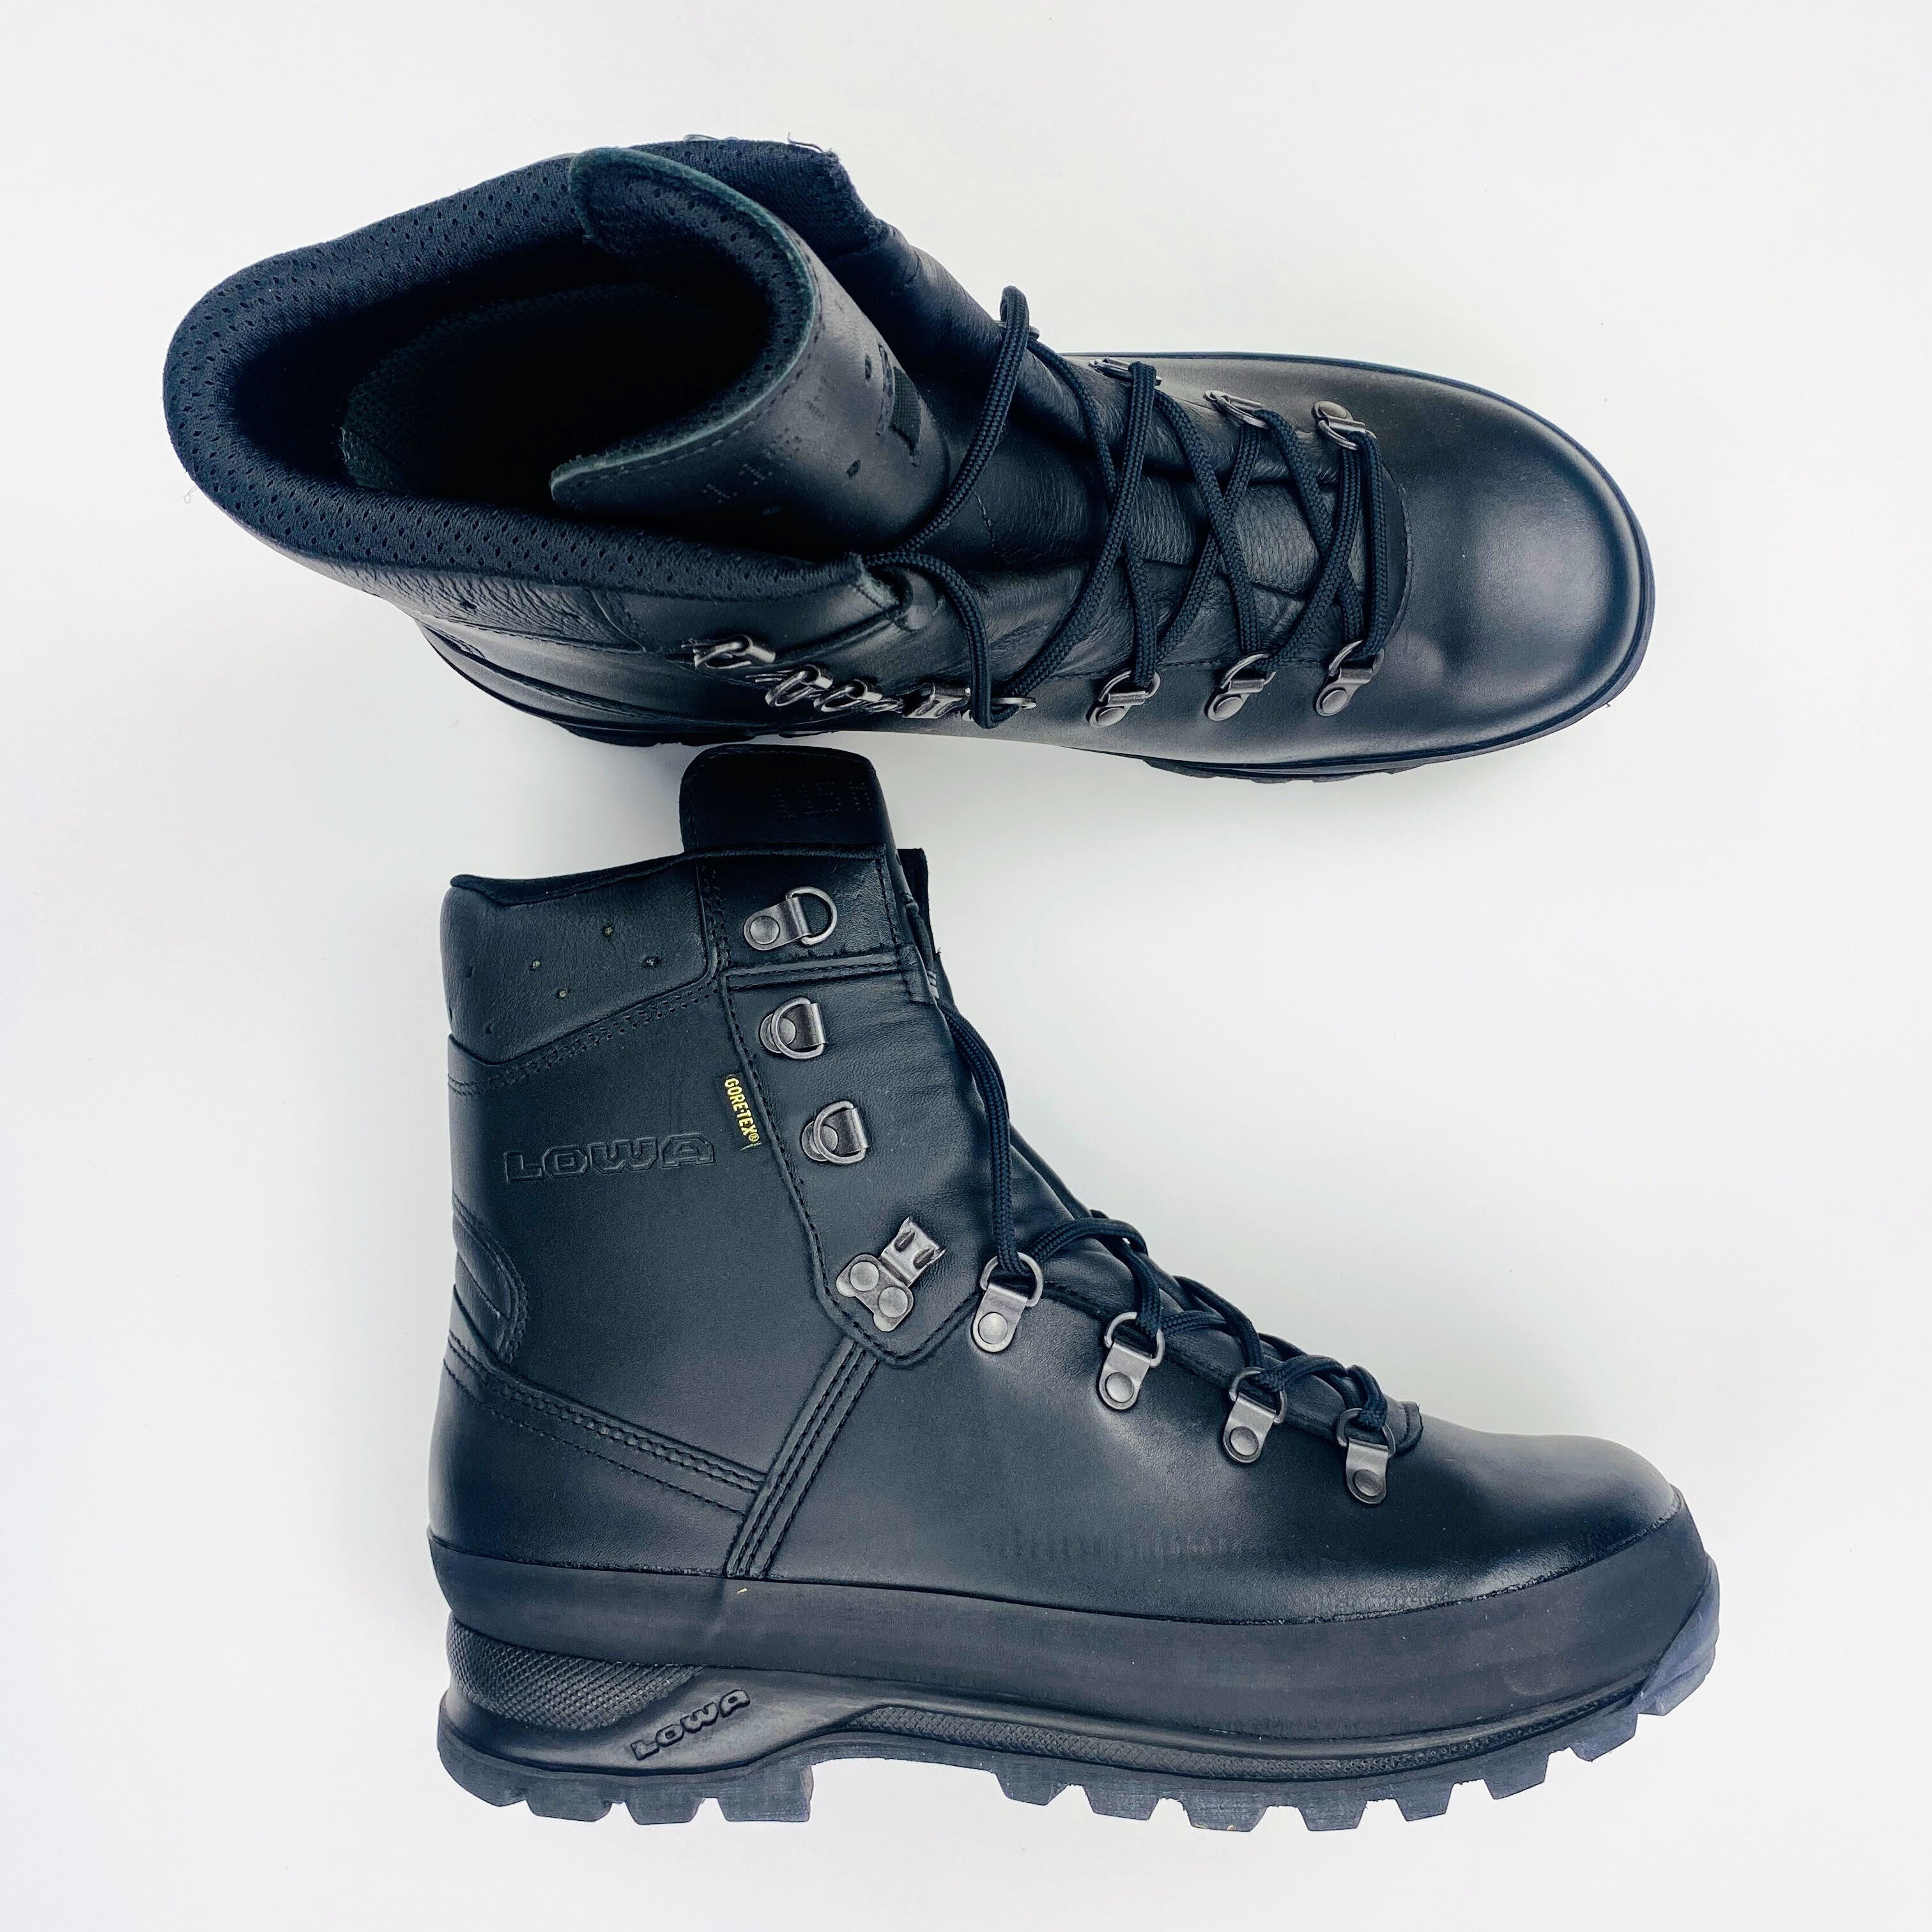 Lowa Mountain Boot GTX PT - Seconde main Chaussures homme - Noir - 46.5 | Hardloop